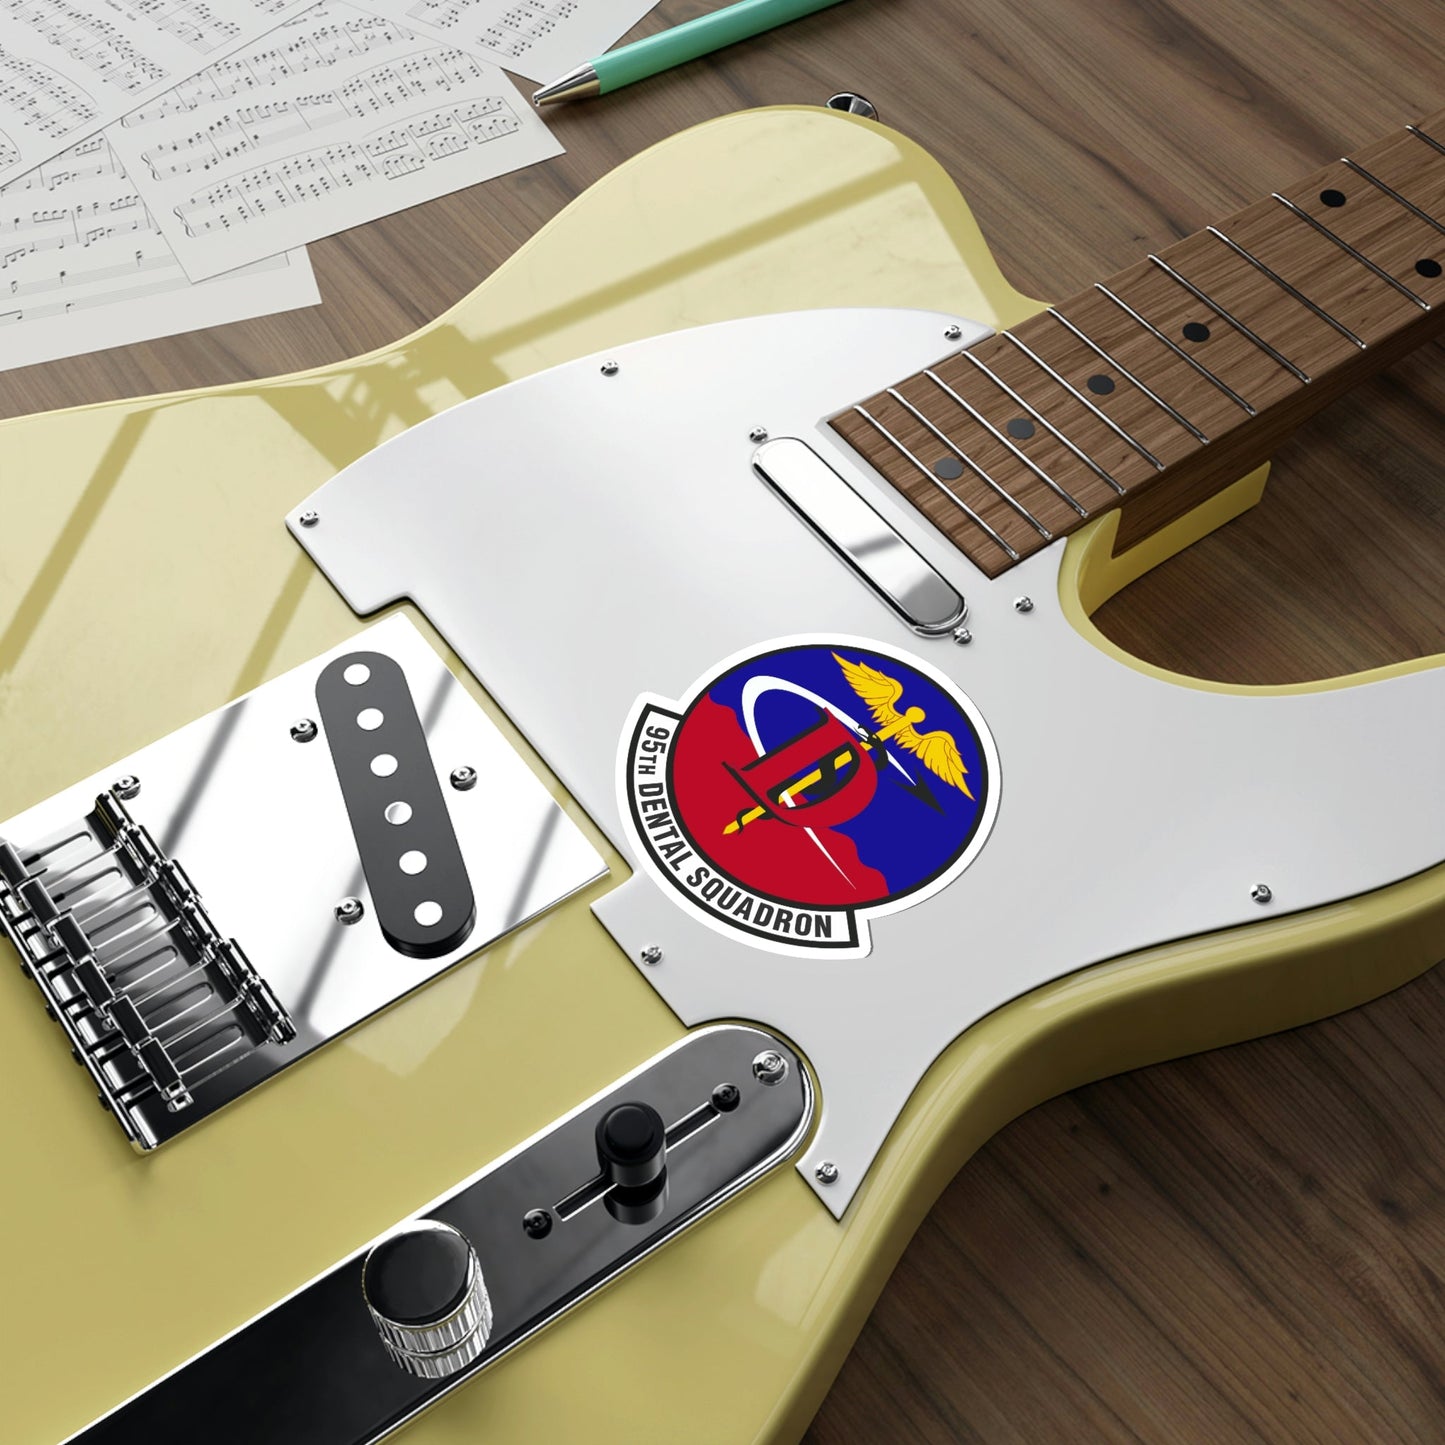 95th Dental Squadron (U.S. Air Force) STICKER Vinyl Die-Cut Decal-The Sticker Space